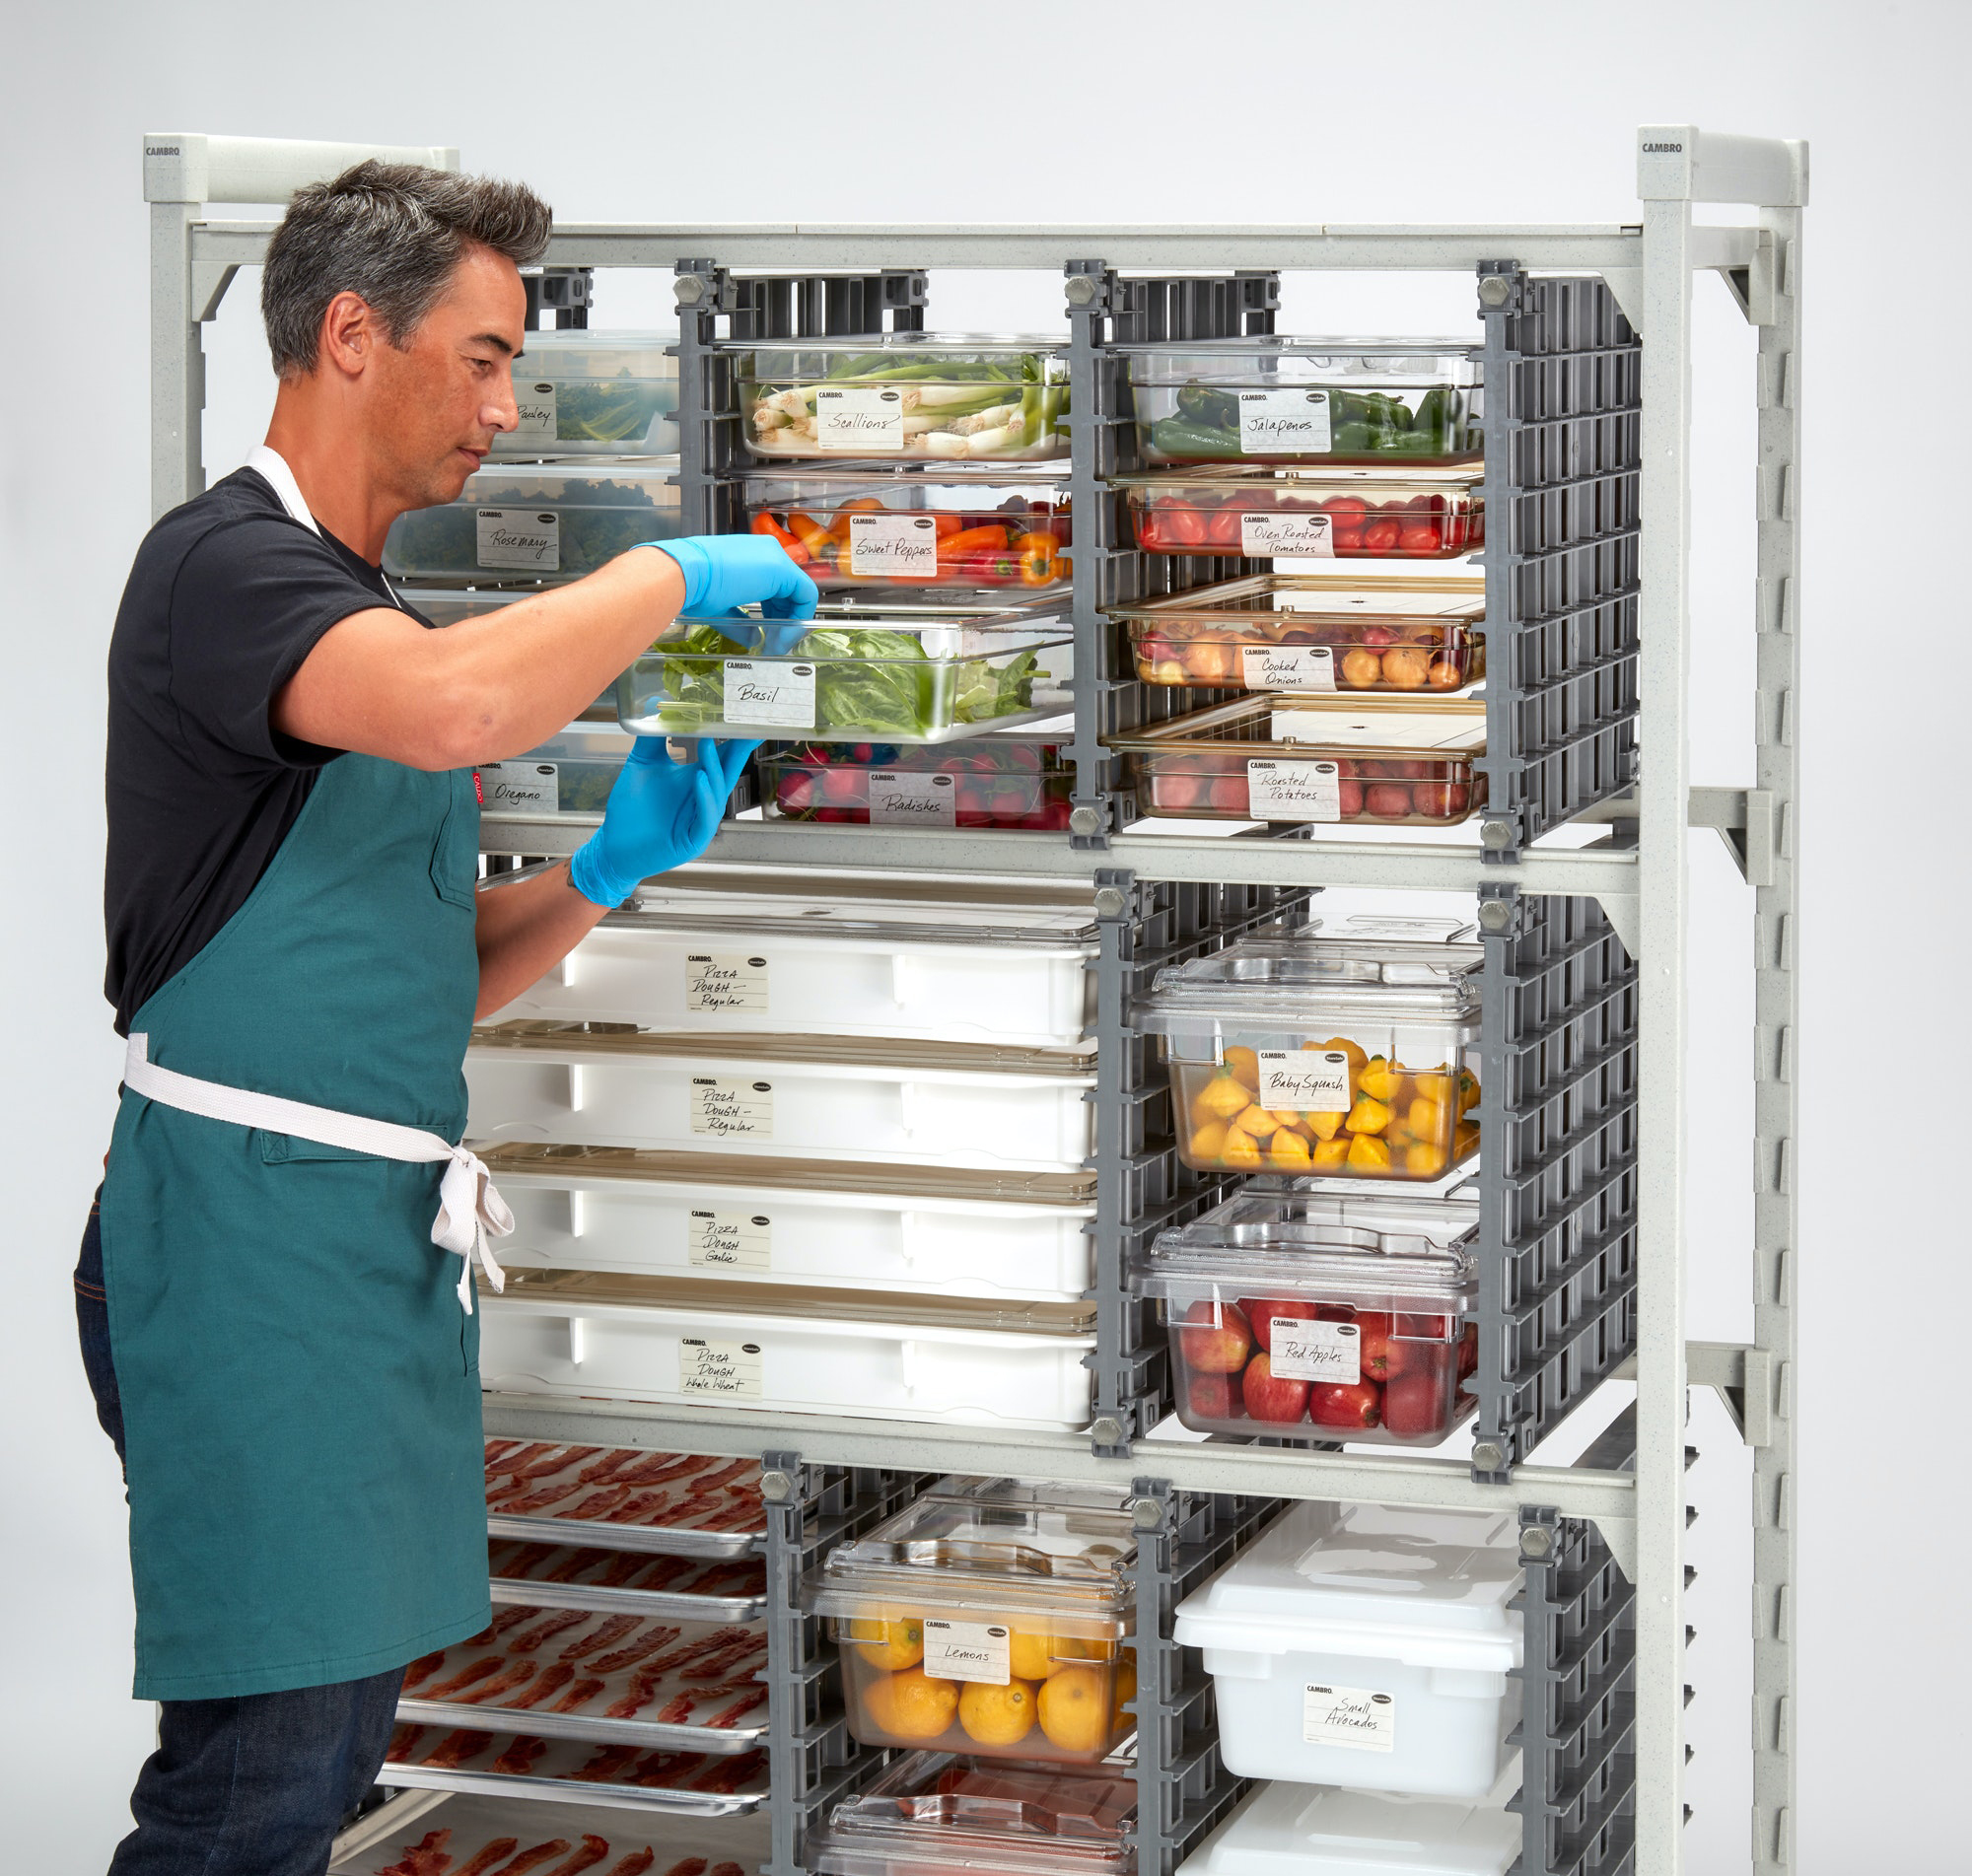 Shelving rack storage system maximises and organises kitchen space